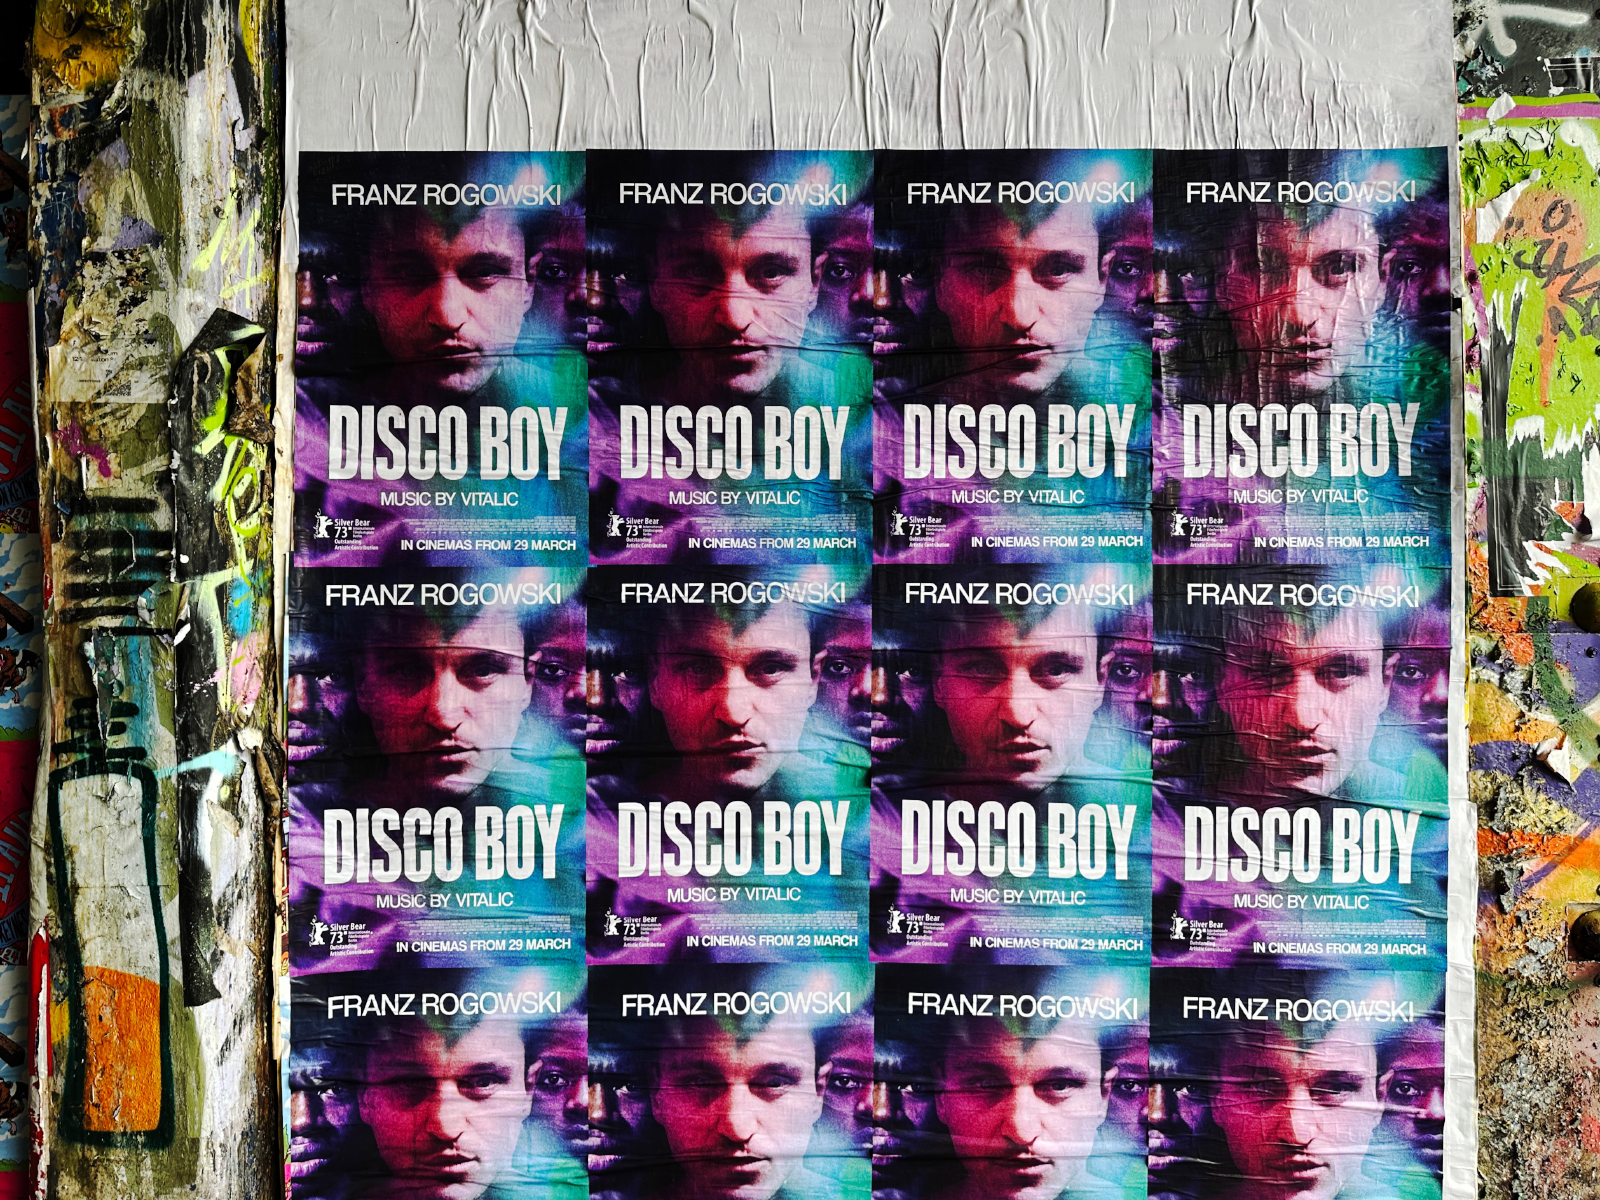 disco boy - flyposting - london